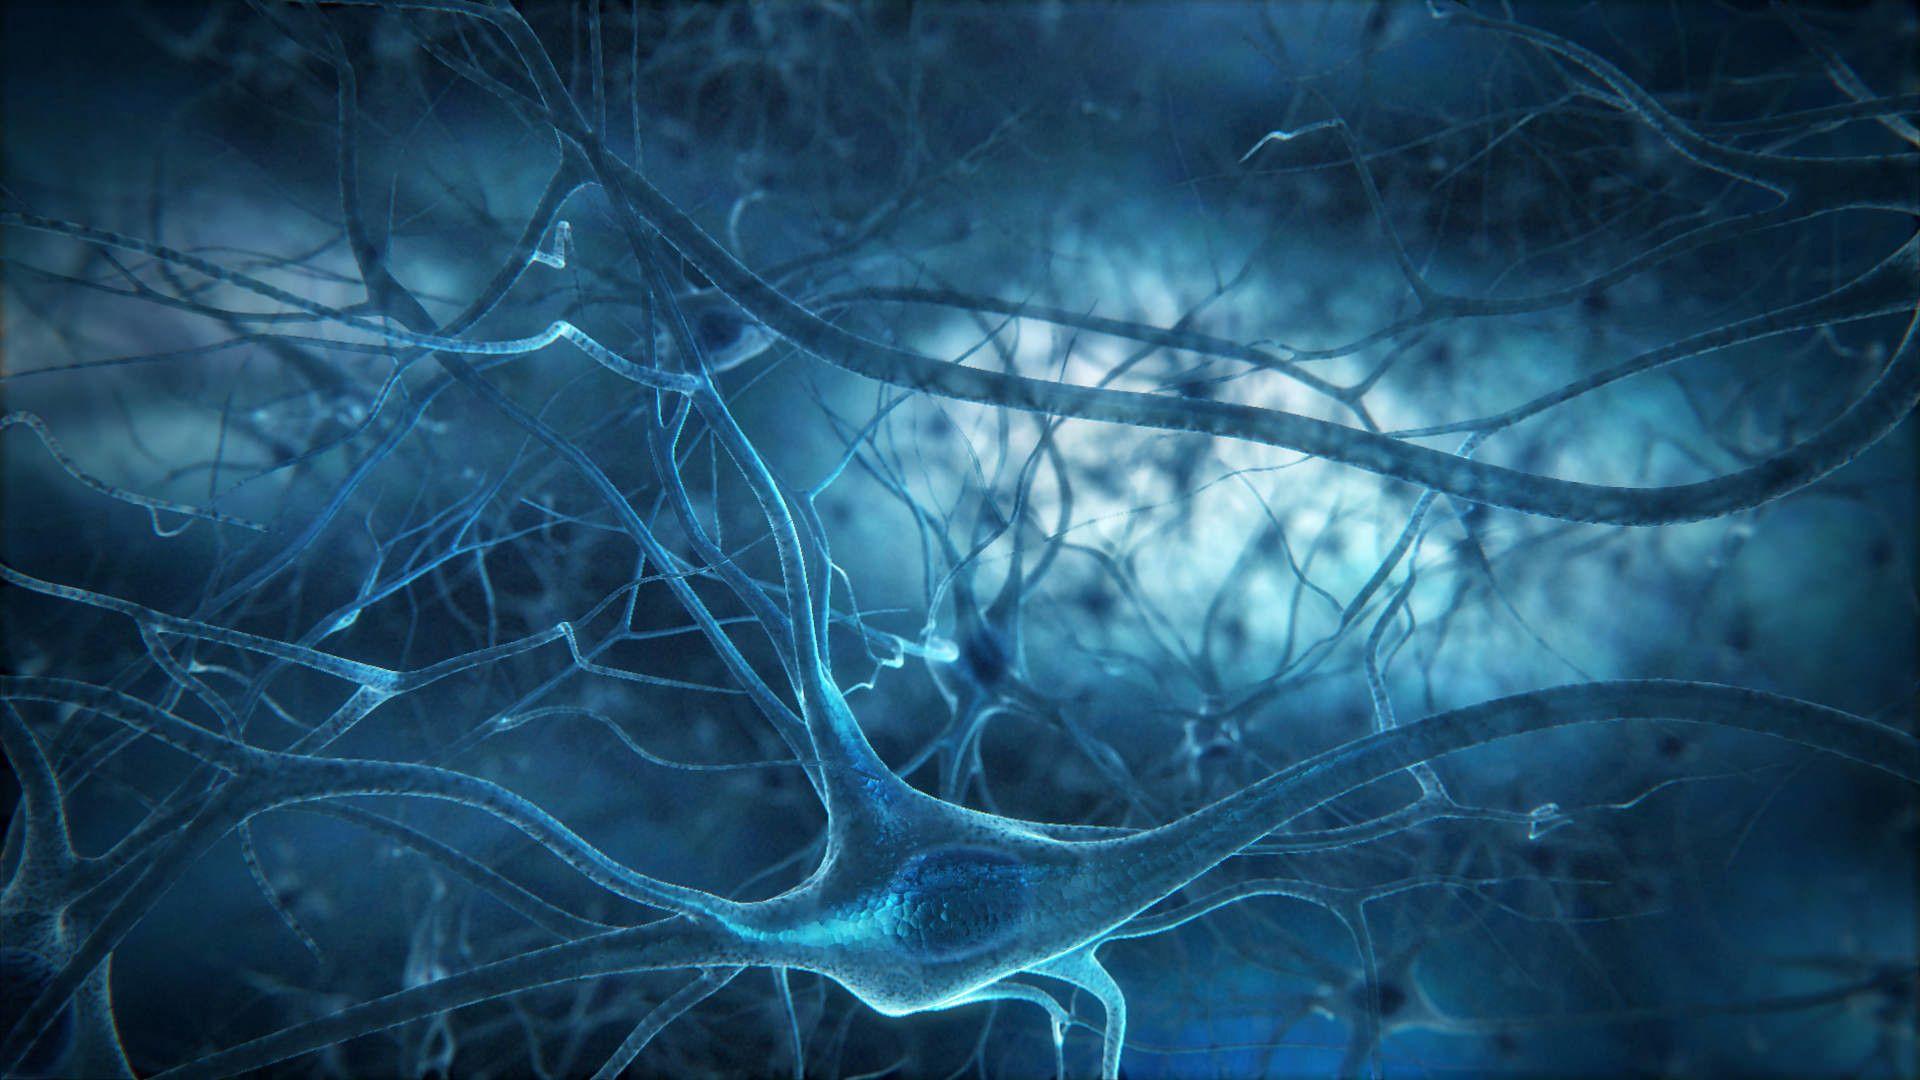 Neuron Wallpaper